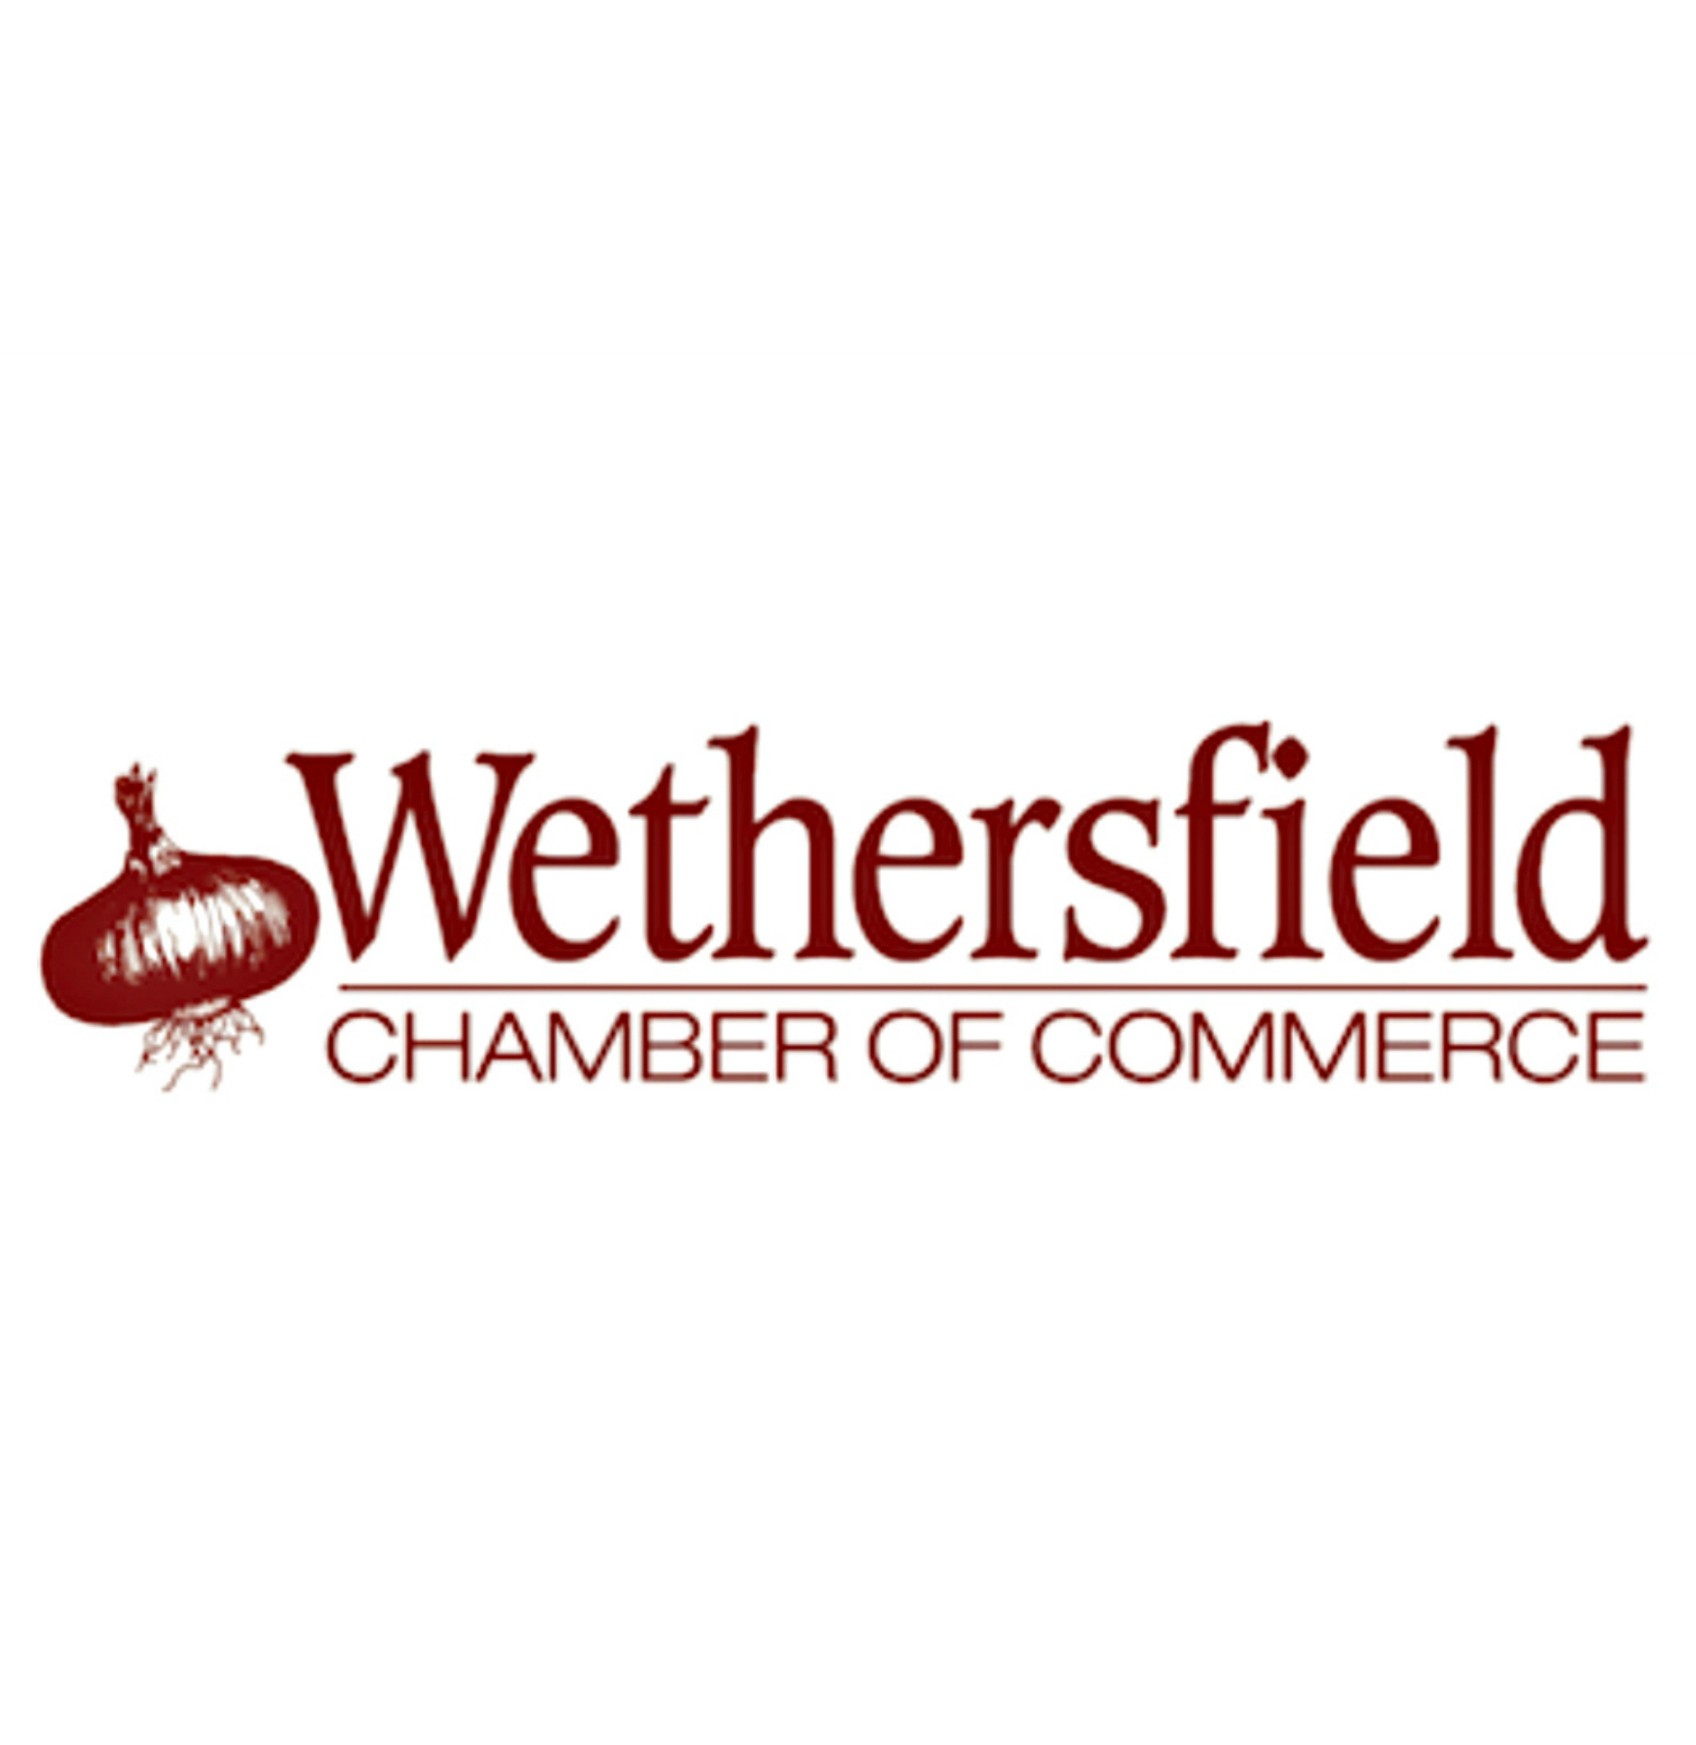 Whethersfield-Chamber-of-Commerce-logo.jpg